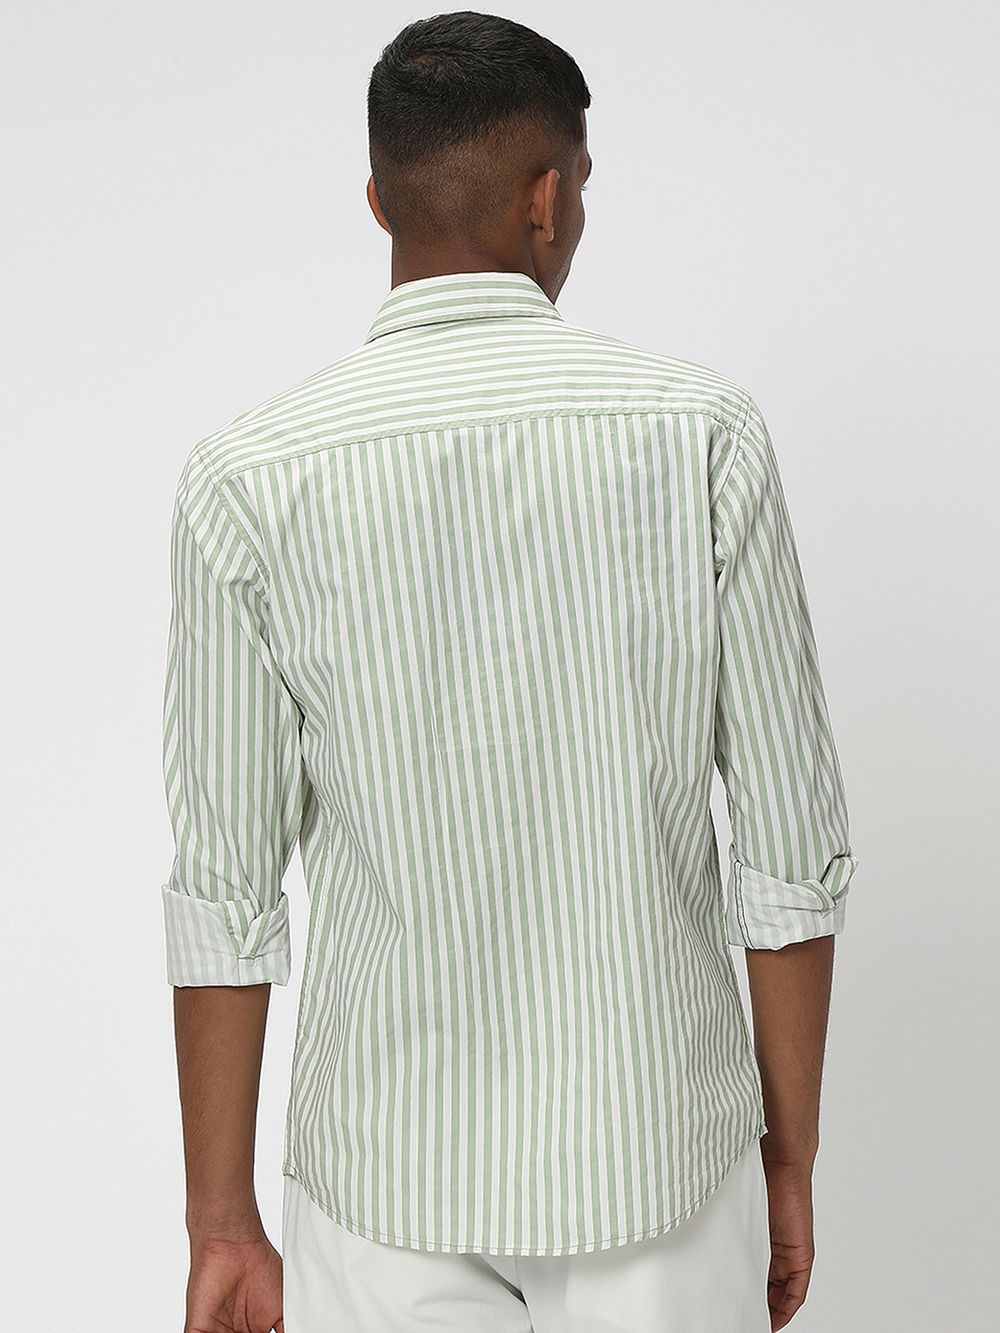 Light Olive & White Candy Stripe Shirt